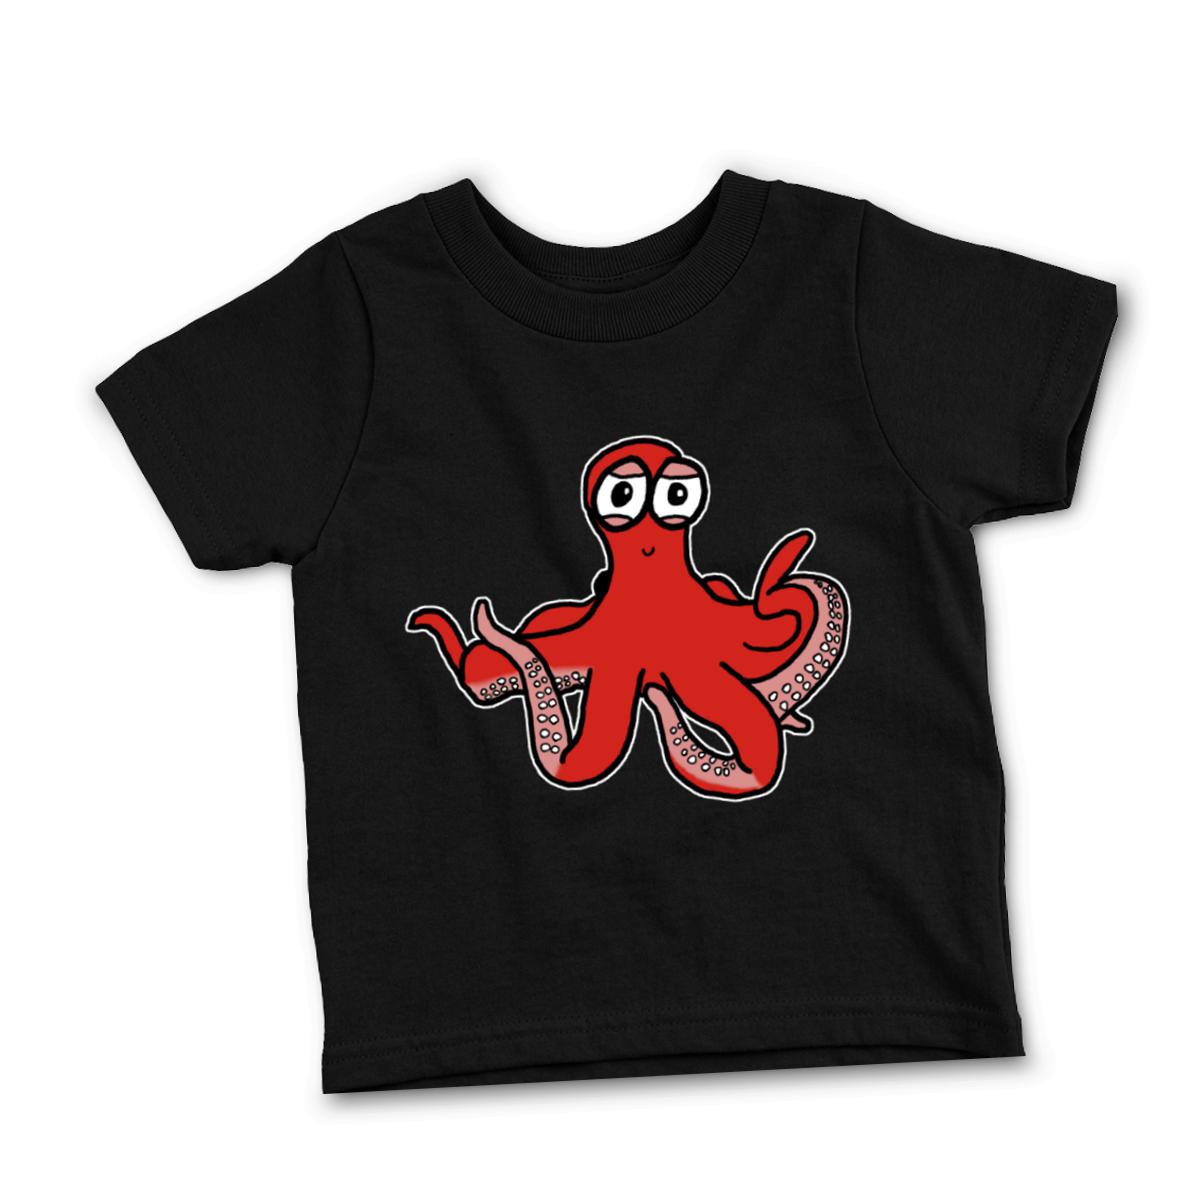 Octopus Infant Tee 12M black